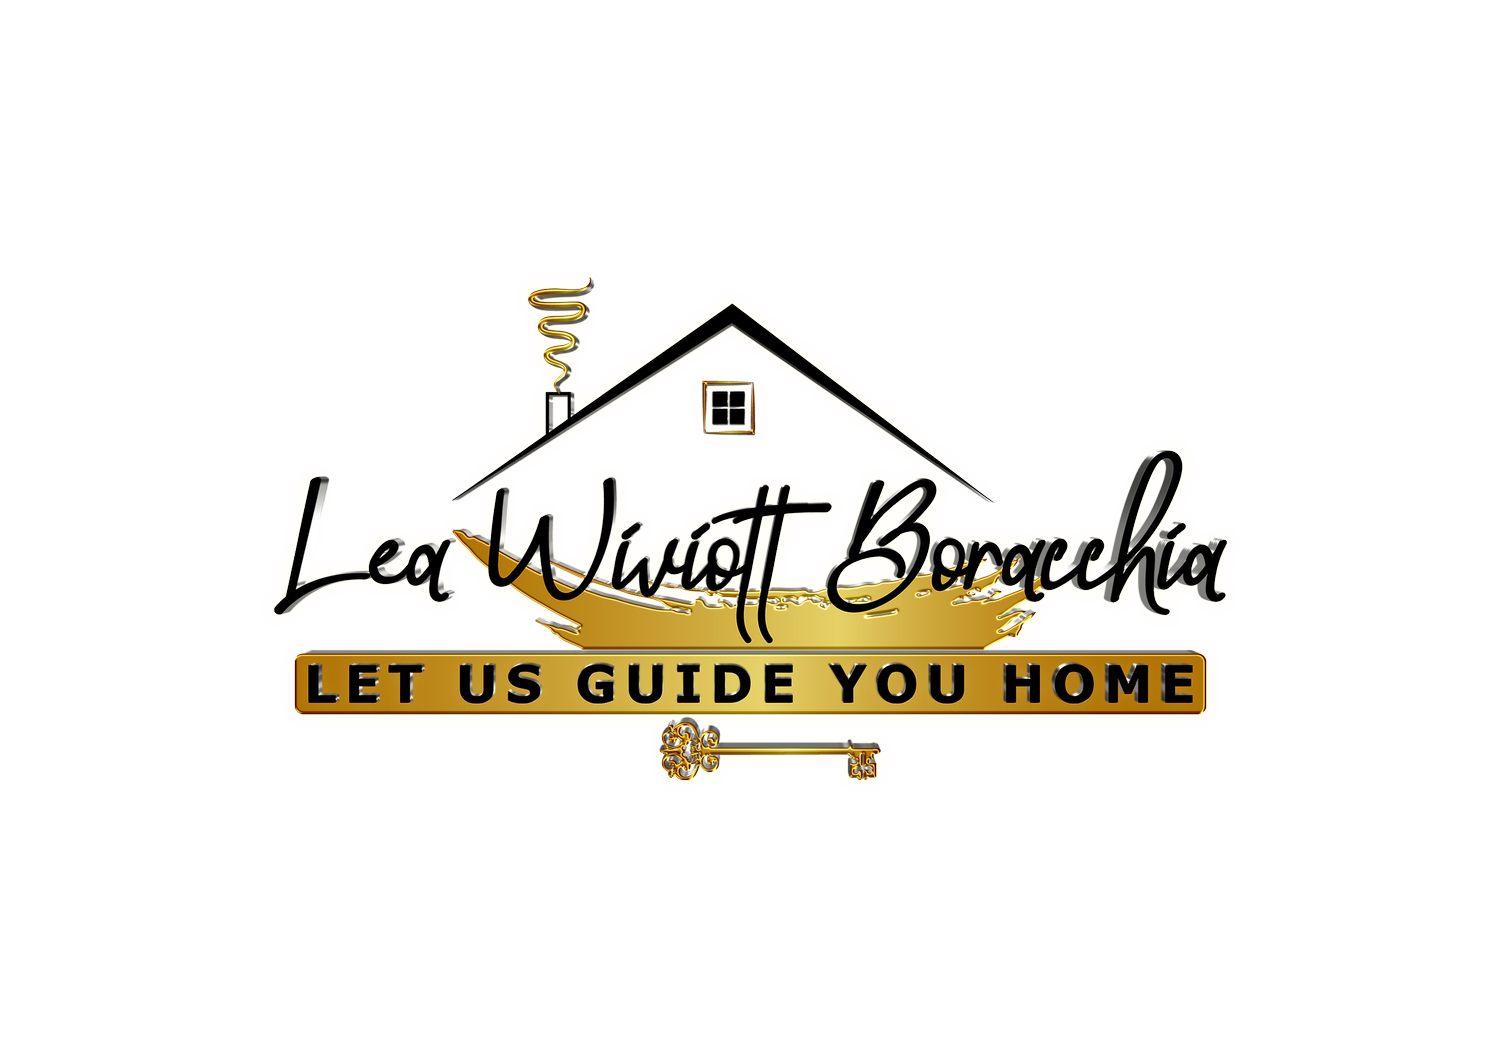 Lea Wiviott Boracchia - Let Us Guide You Home